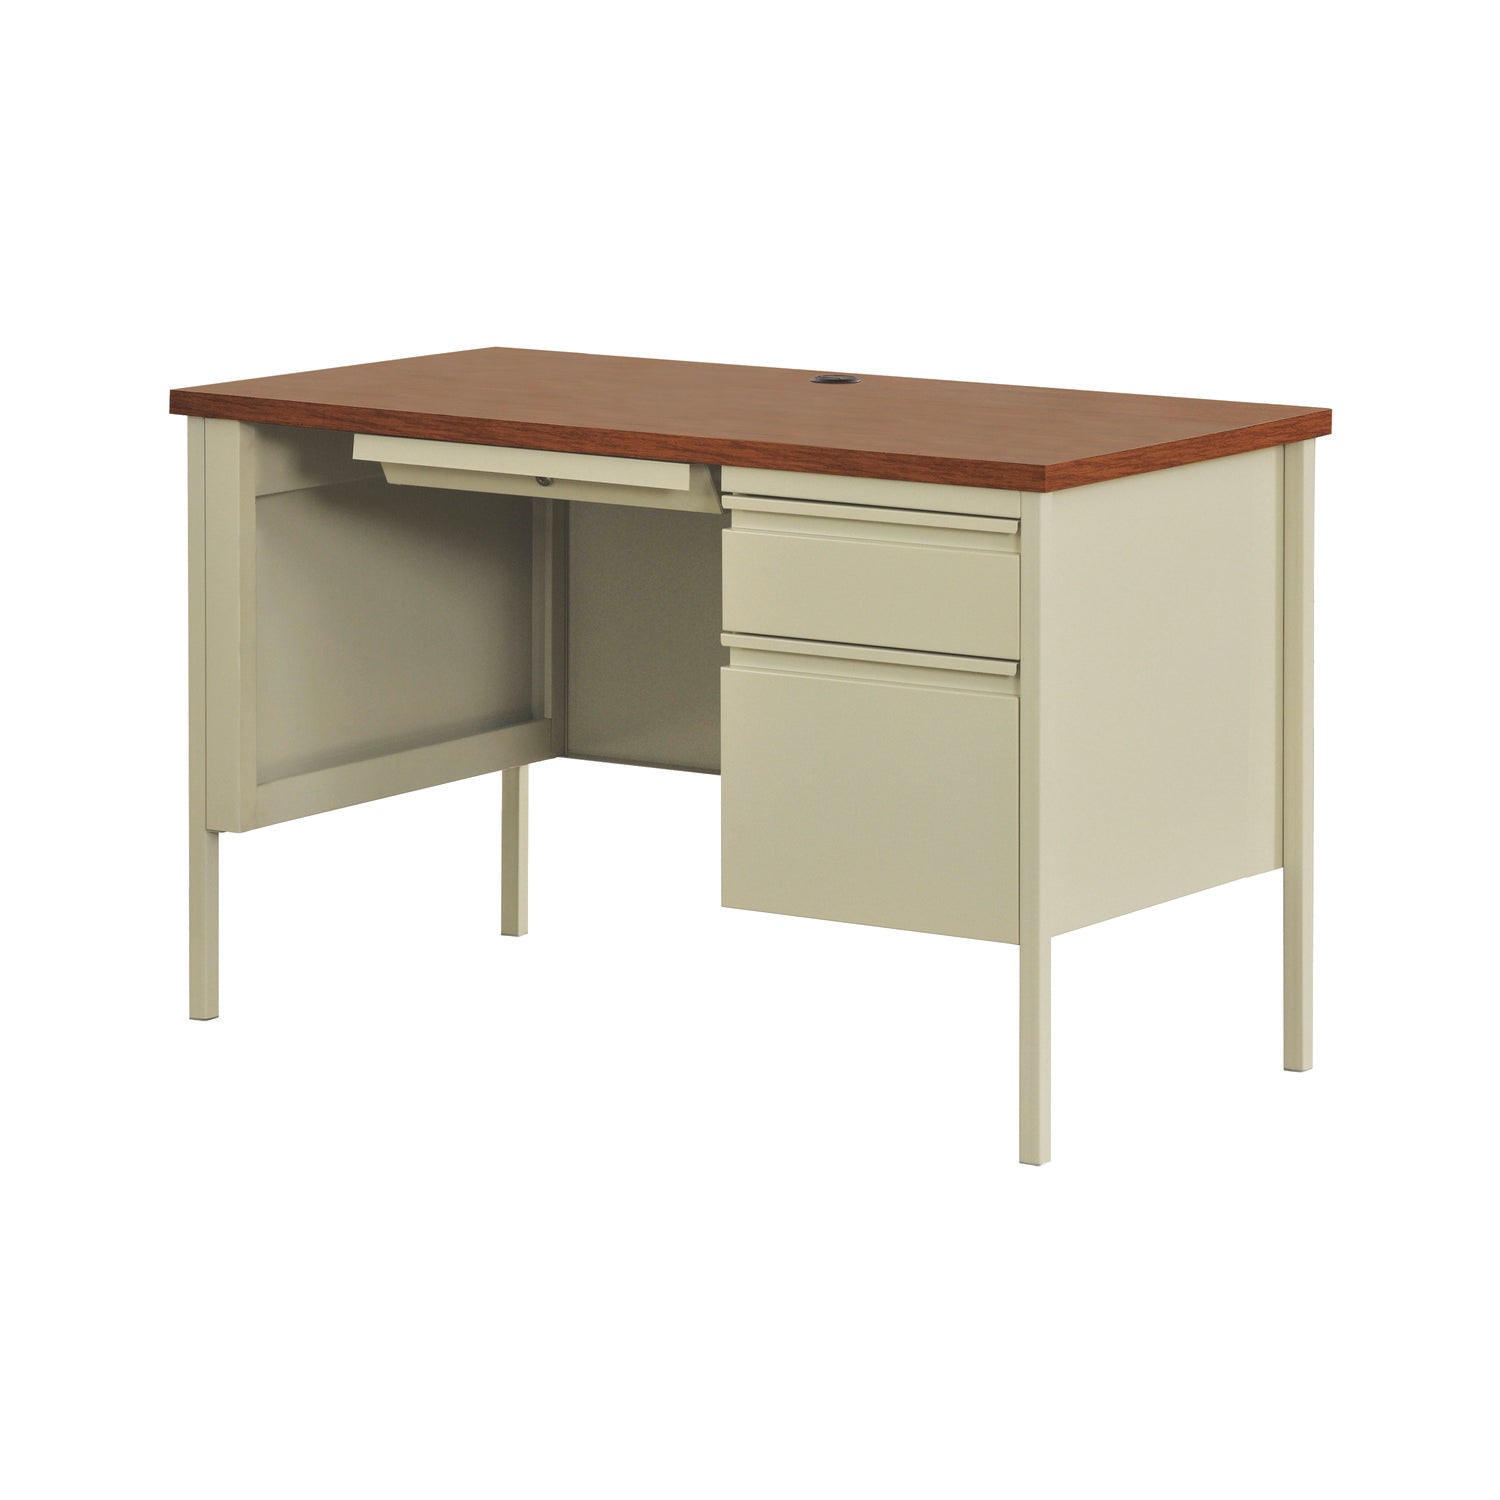 single-pedestal-steel-desk-45-x-24-x-295-cherry-putty_alehsd4524pc - 2